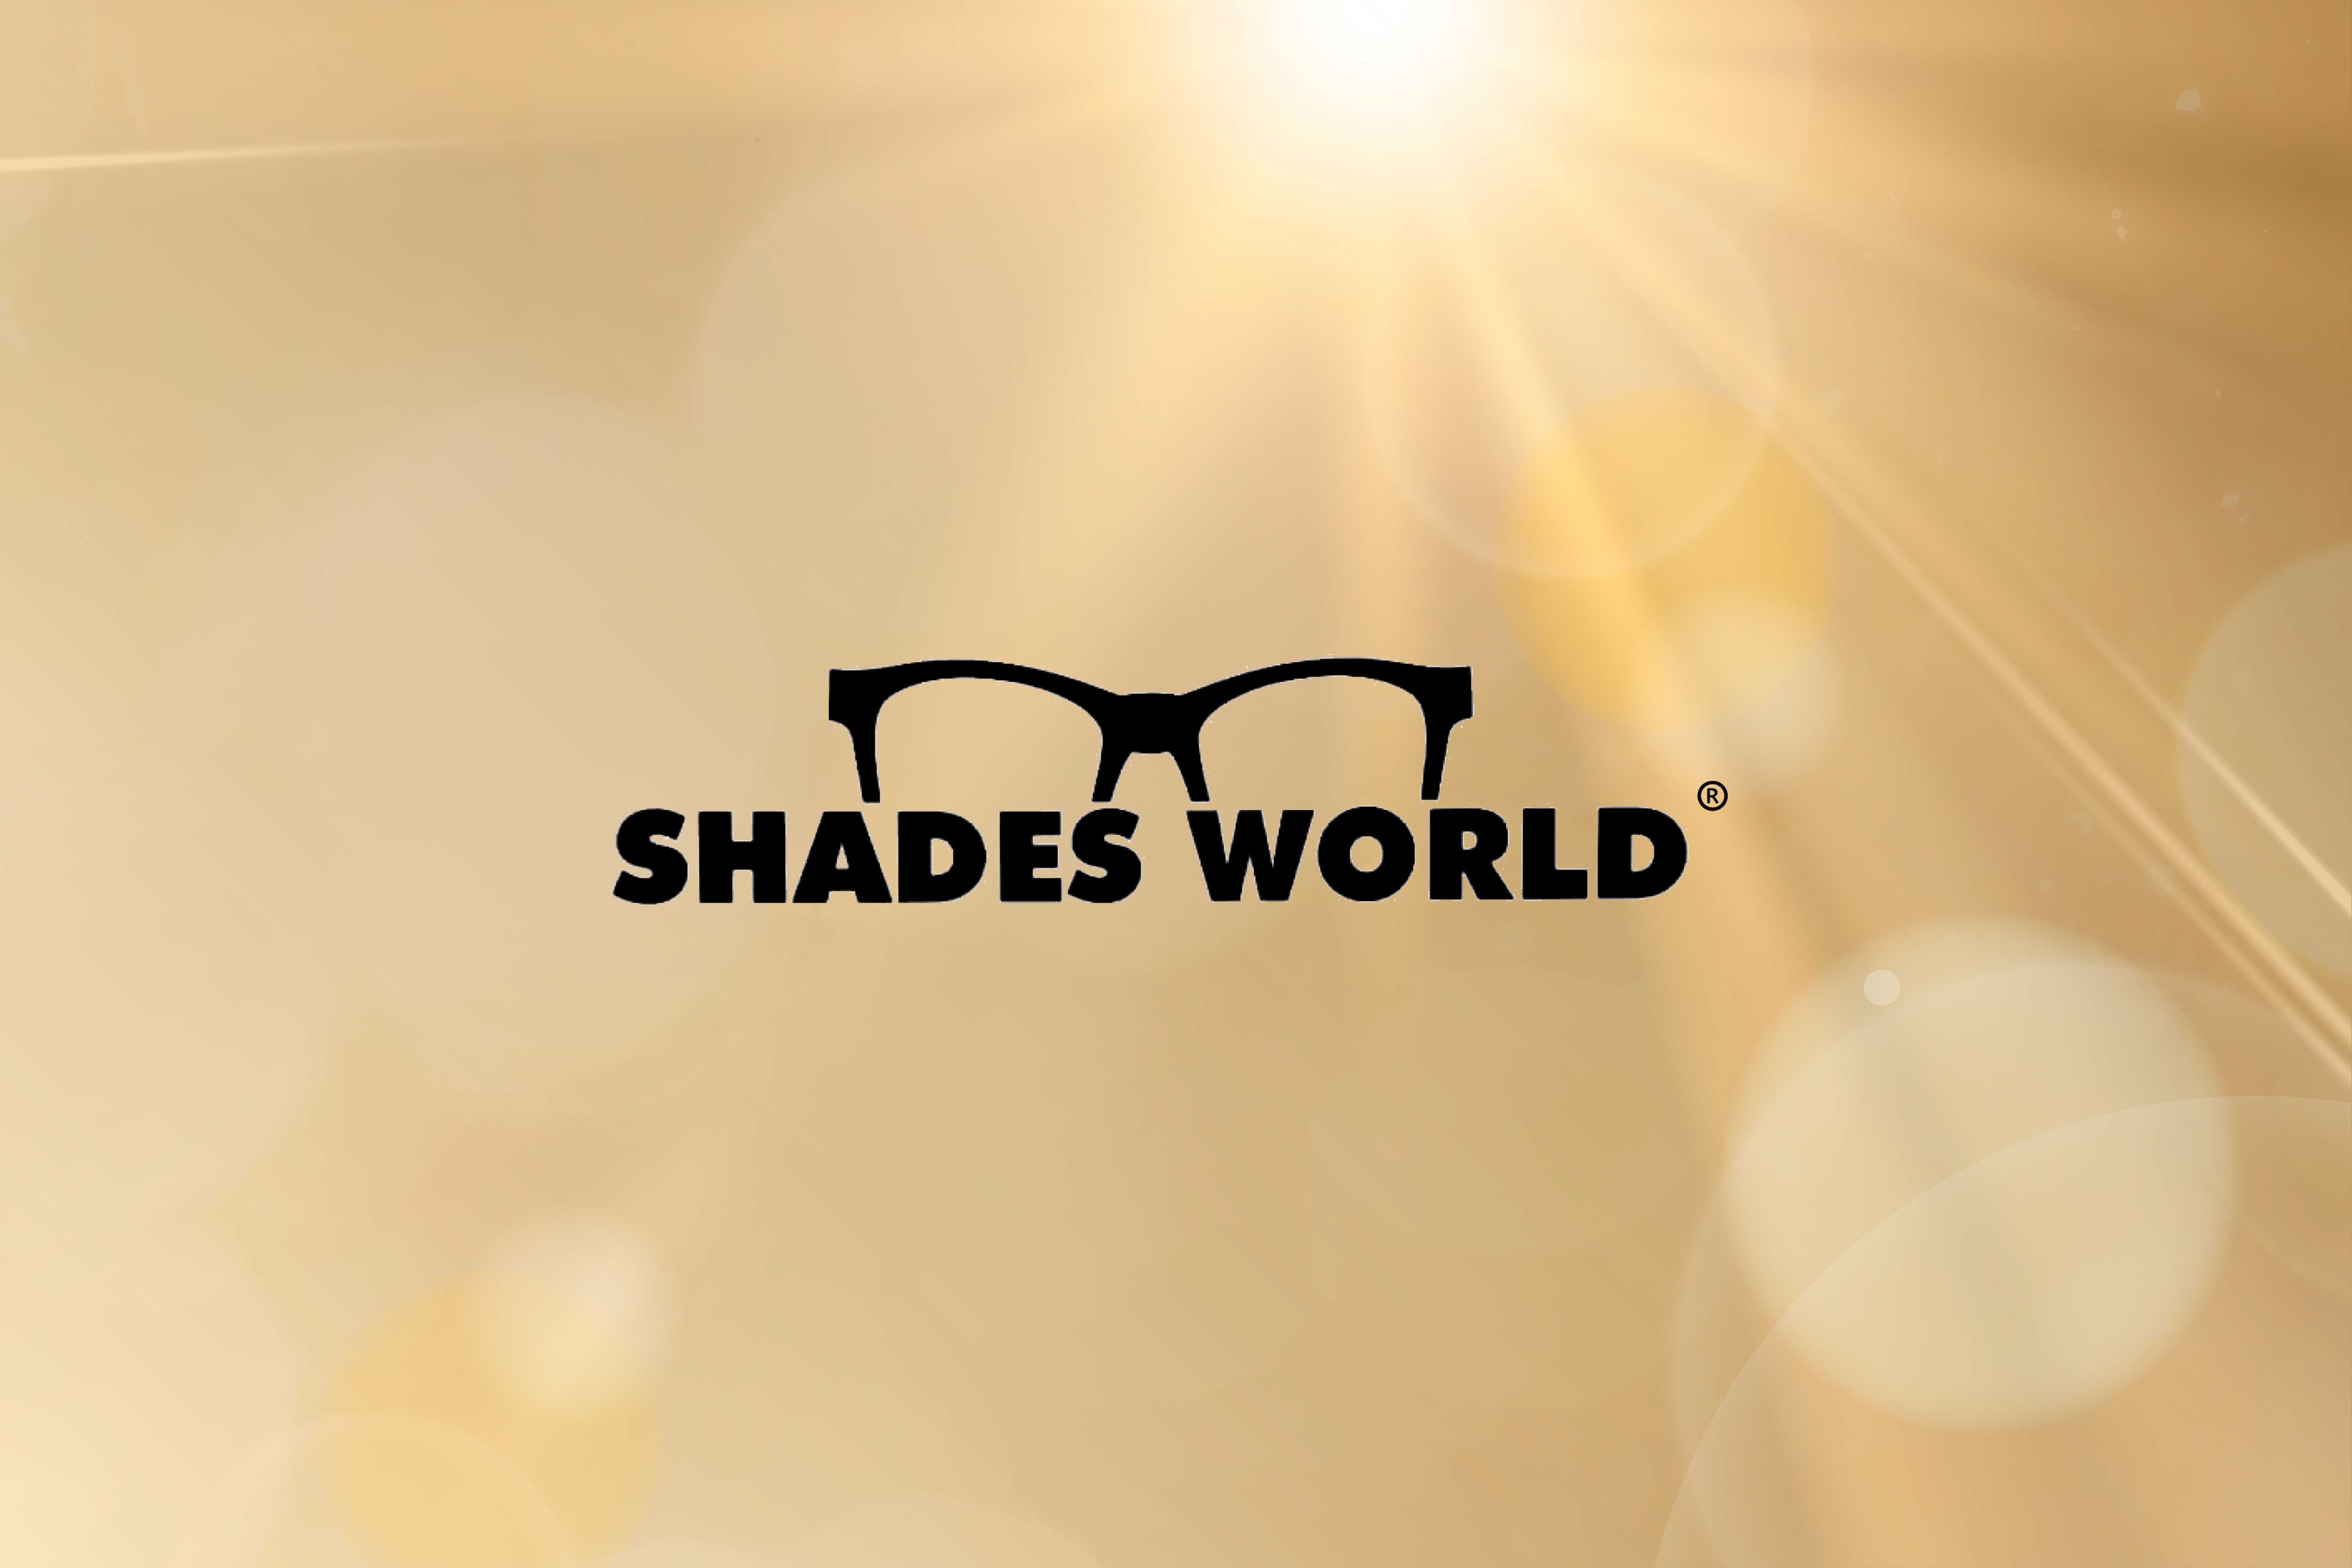 Why Shades World?